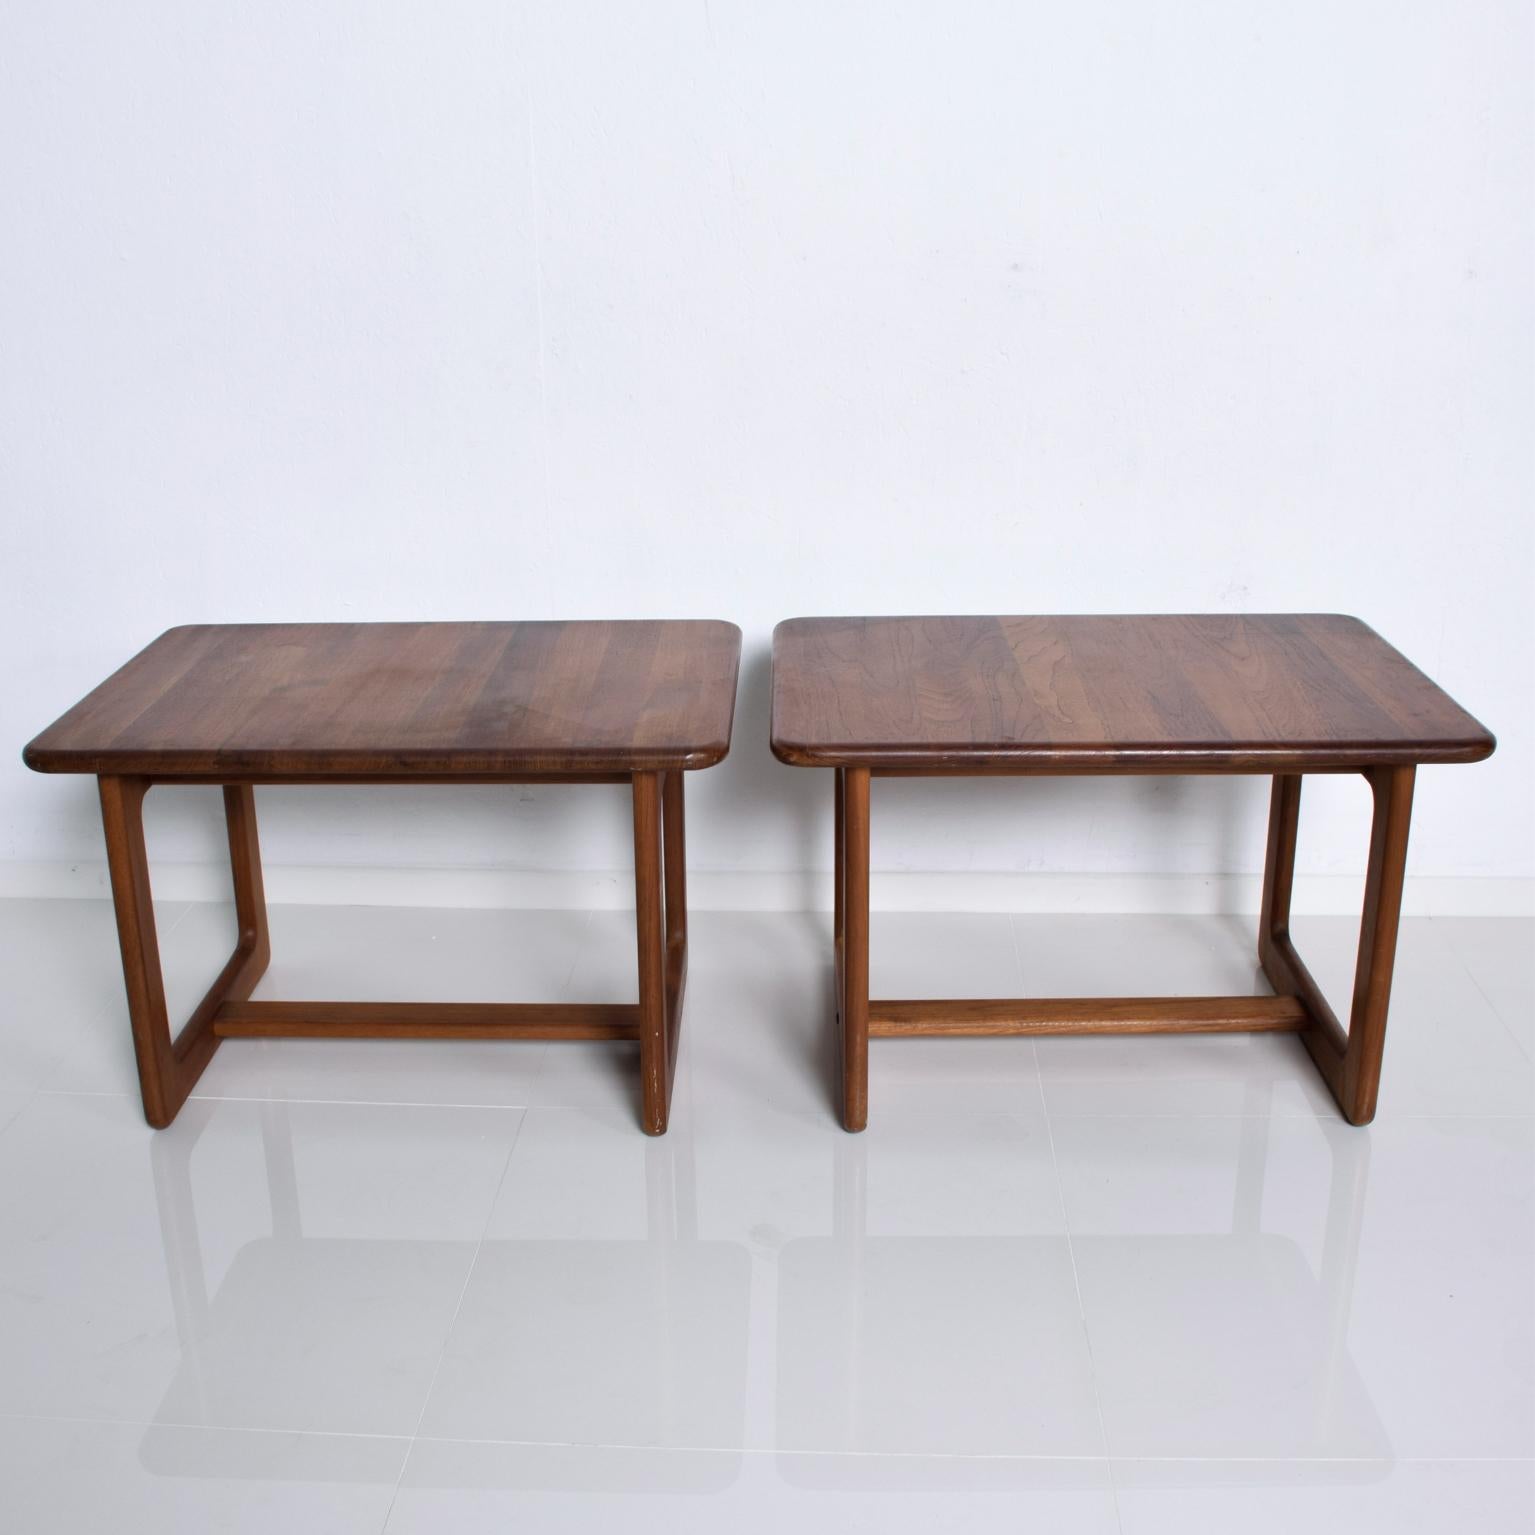 Scandinavian Modern After Finn Juhl France & Son Organic Modern Side Tables Solid Teakwood Denmark 